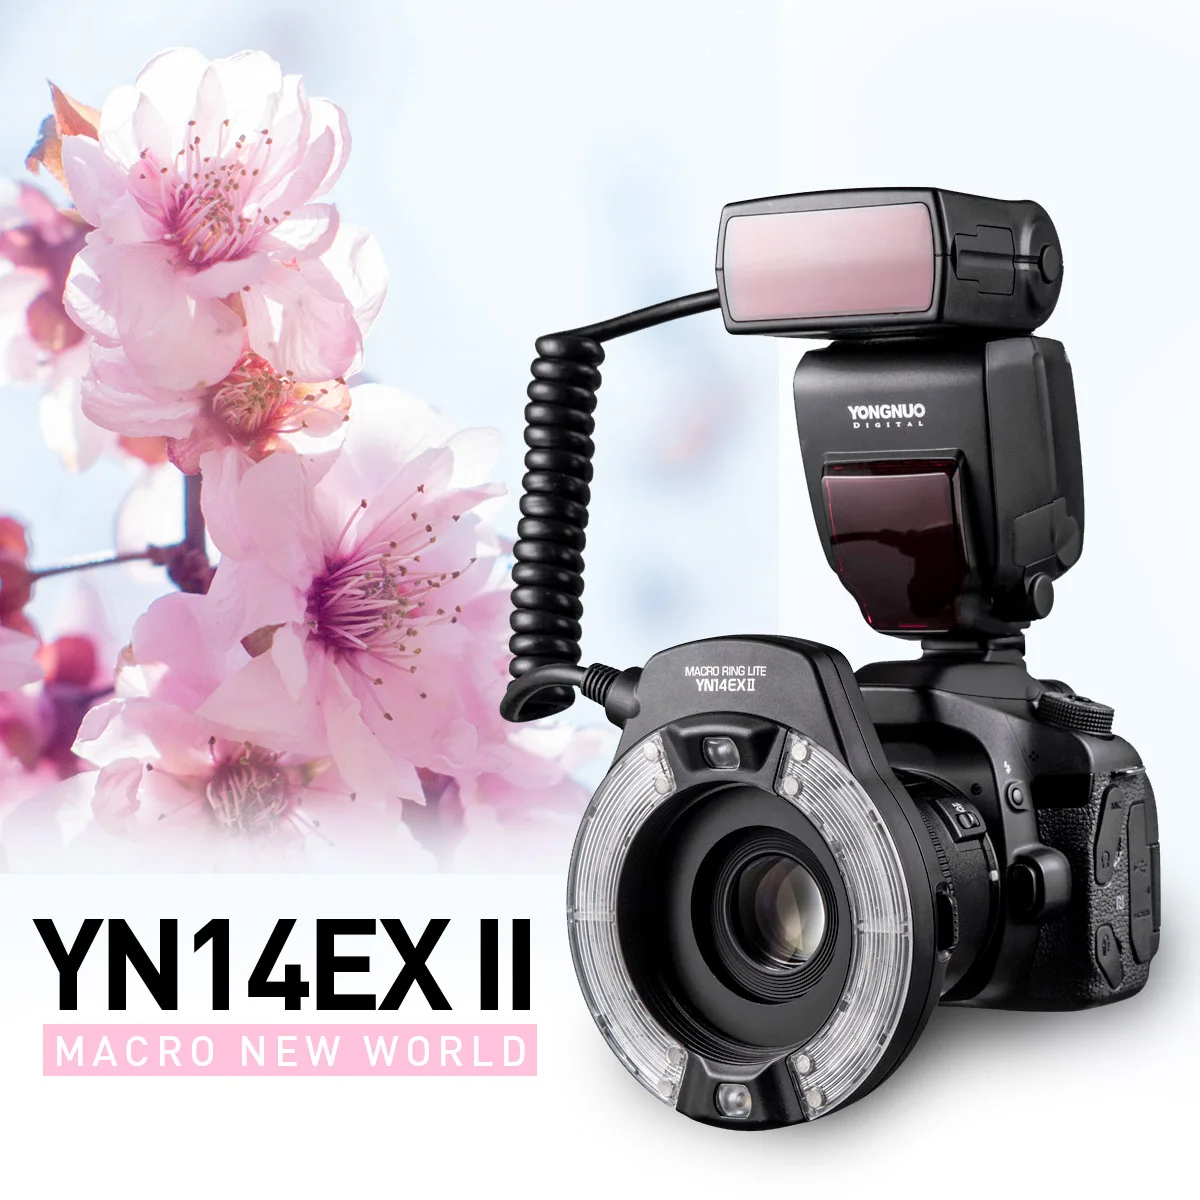 

YONGNUO TTL 14EX II LED Macro Ring Flash Speedlite Light YN14EX II for Canon EOS 1Dx 5D3 6D 7D 70D 80D Cameras